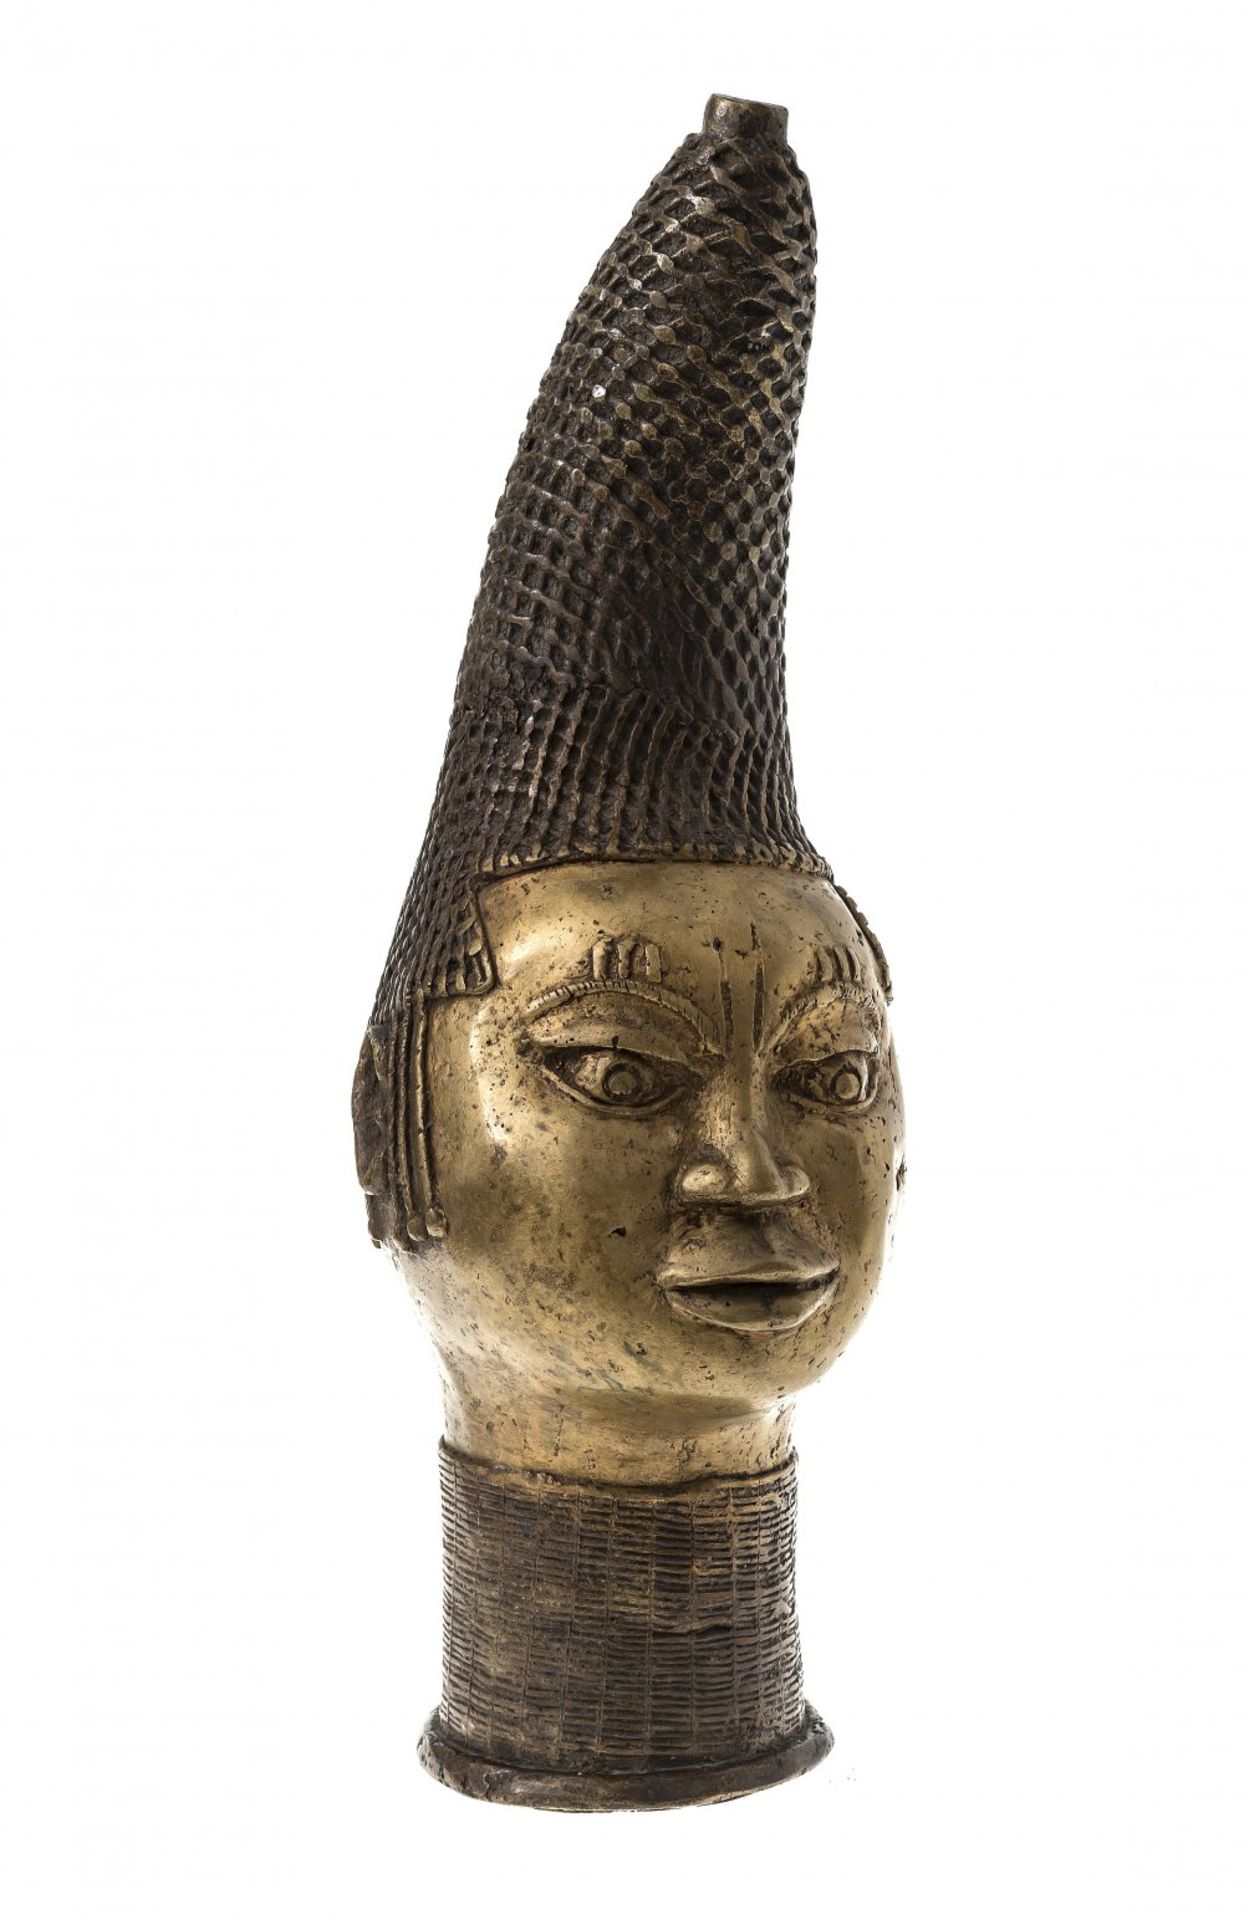 Commemorative head of a Nigerian queen